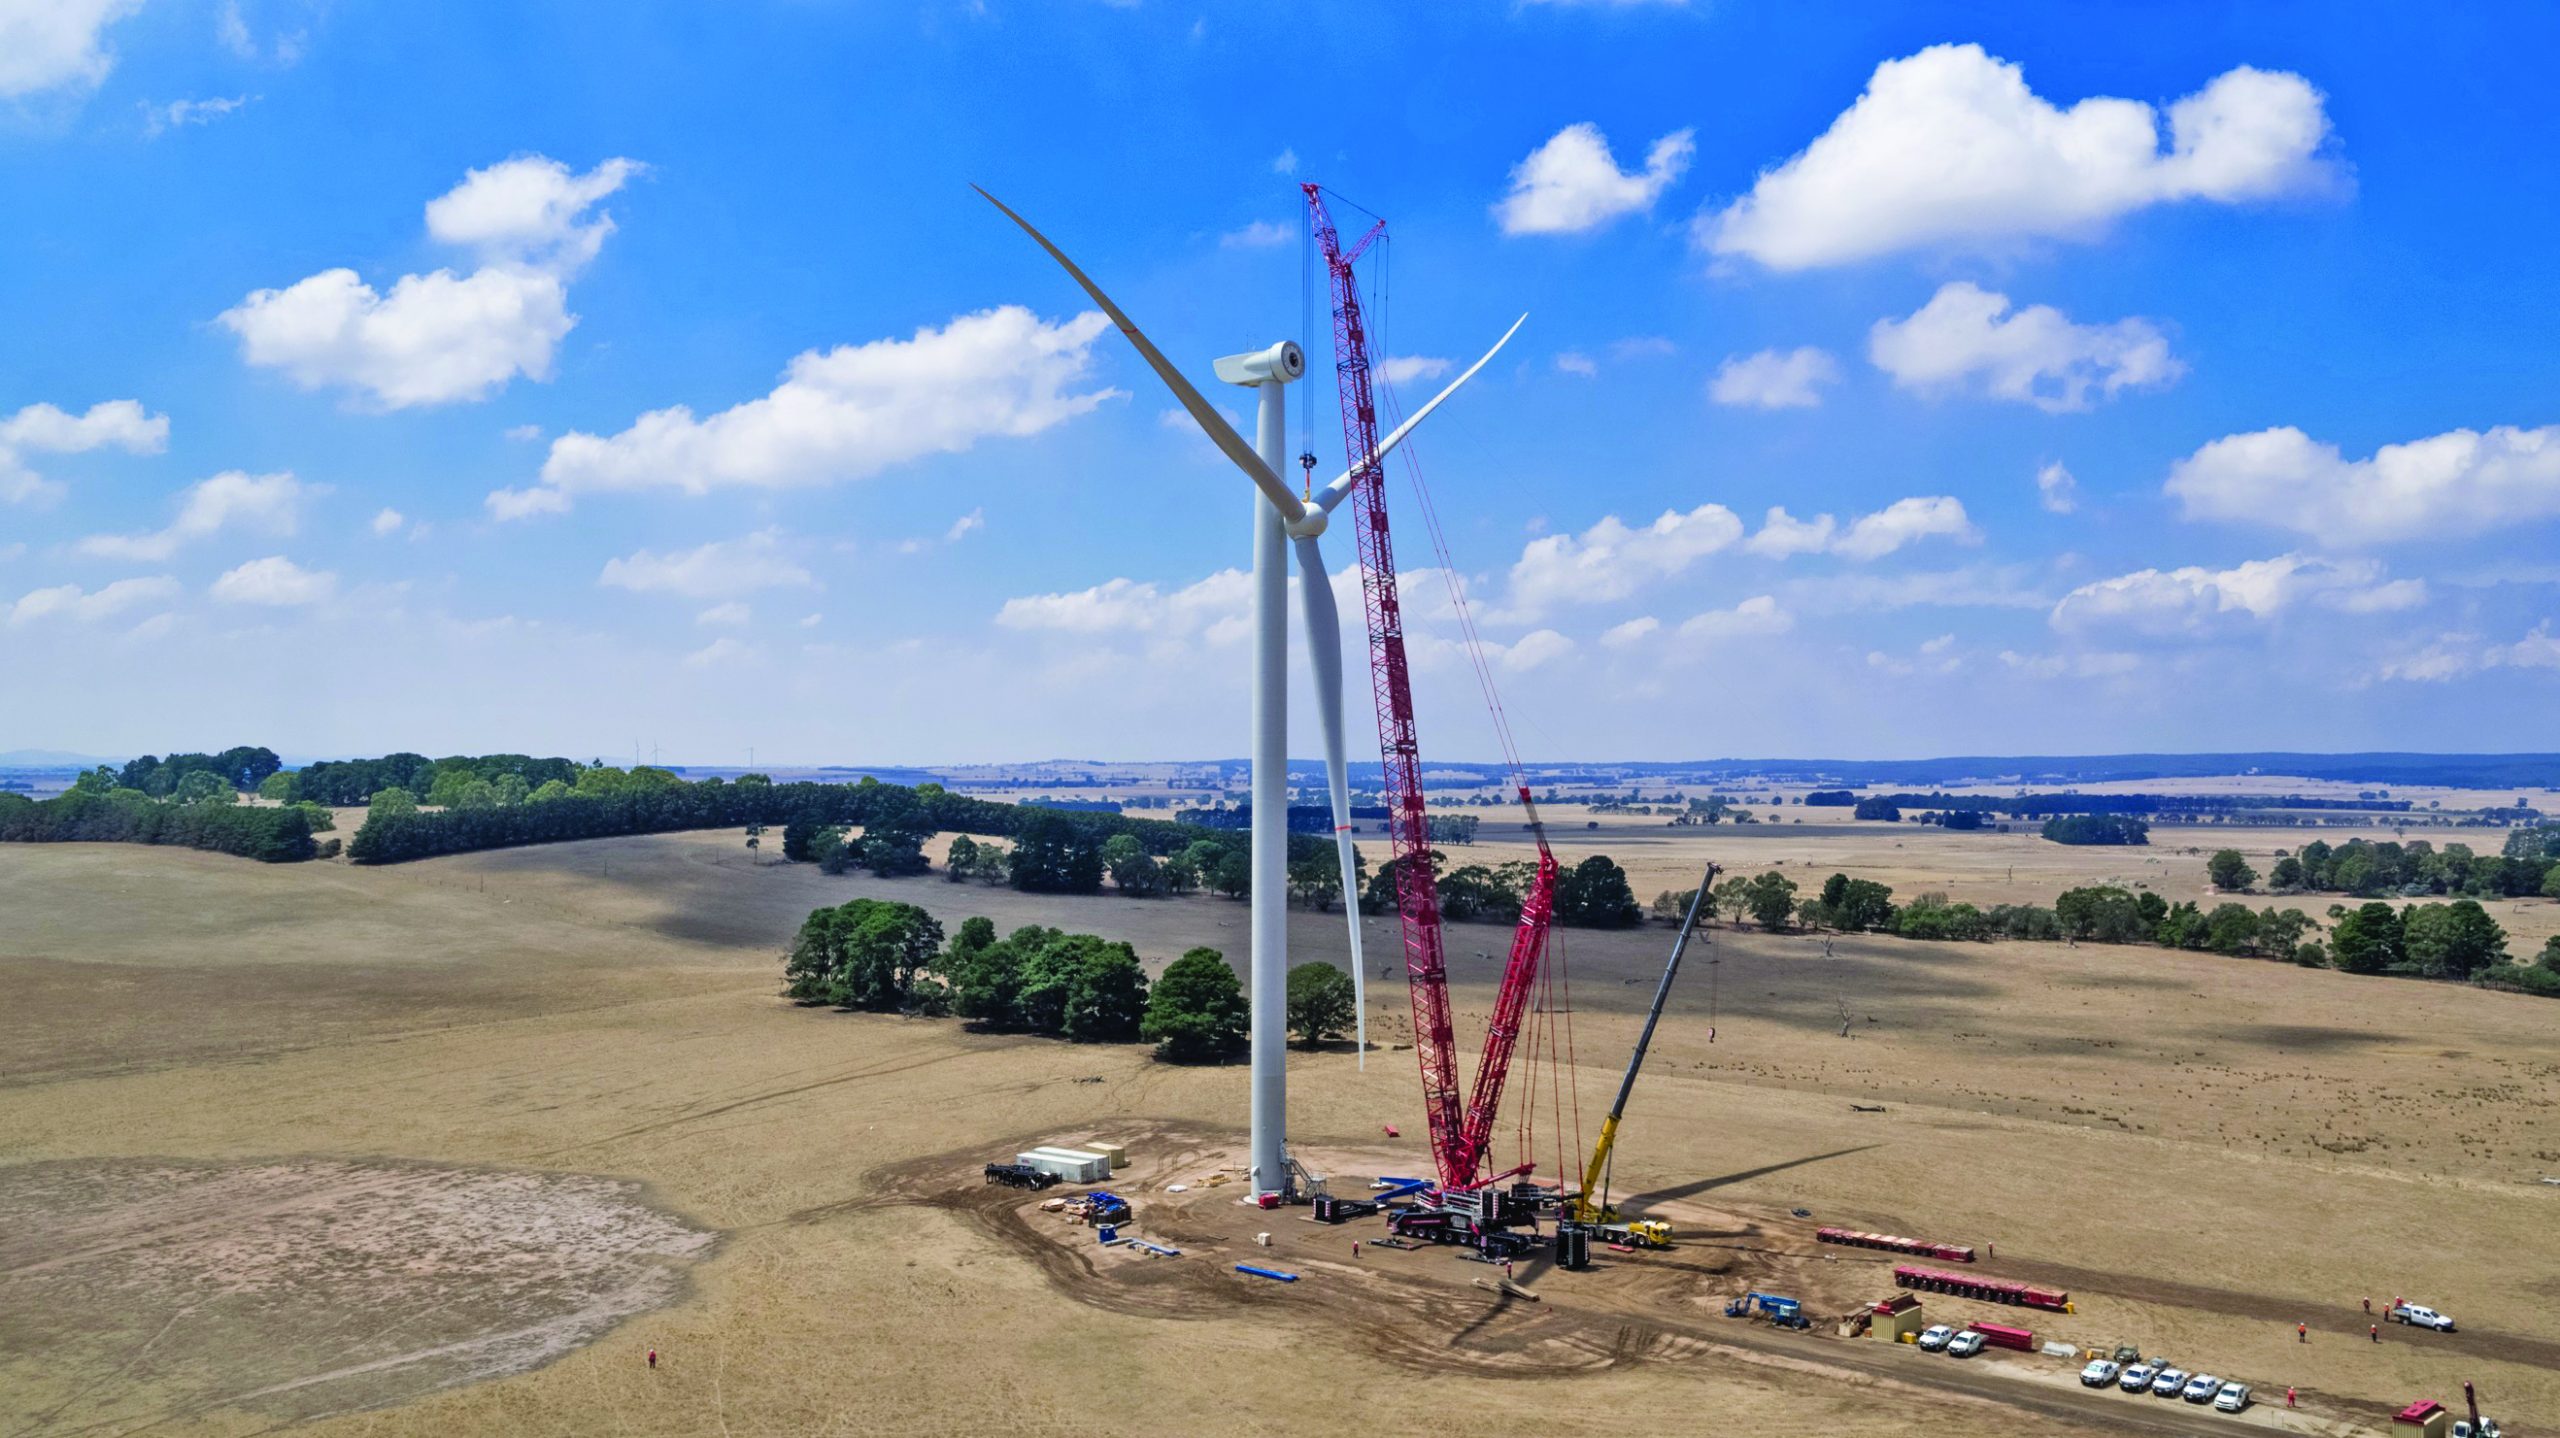 Increasing bearing capacity at onshore wind farms